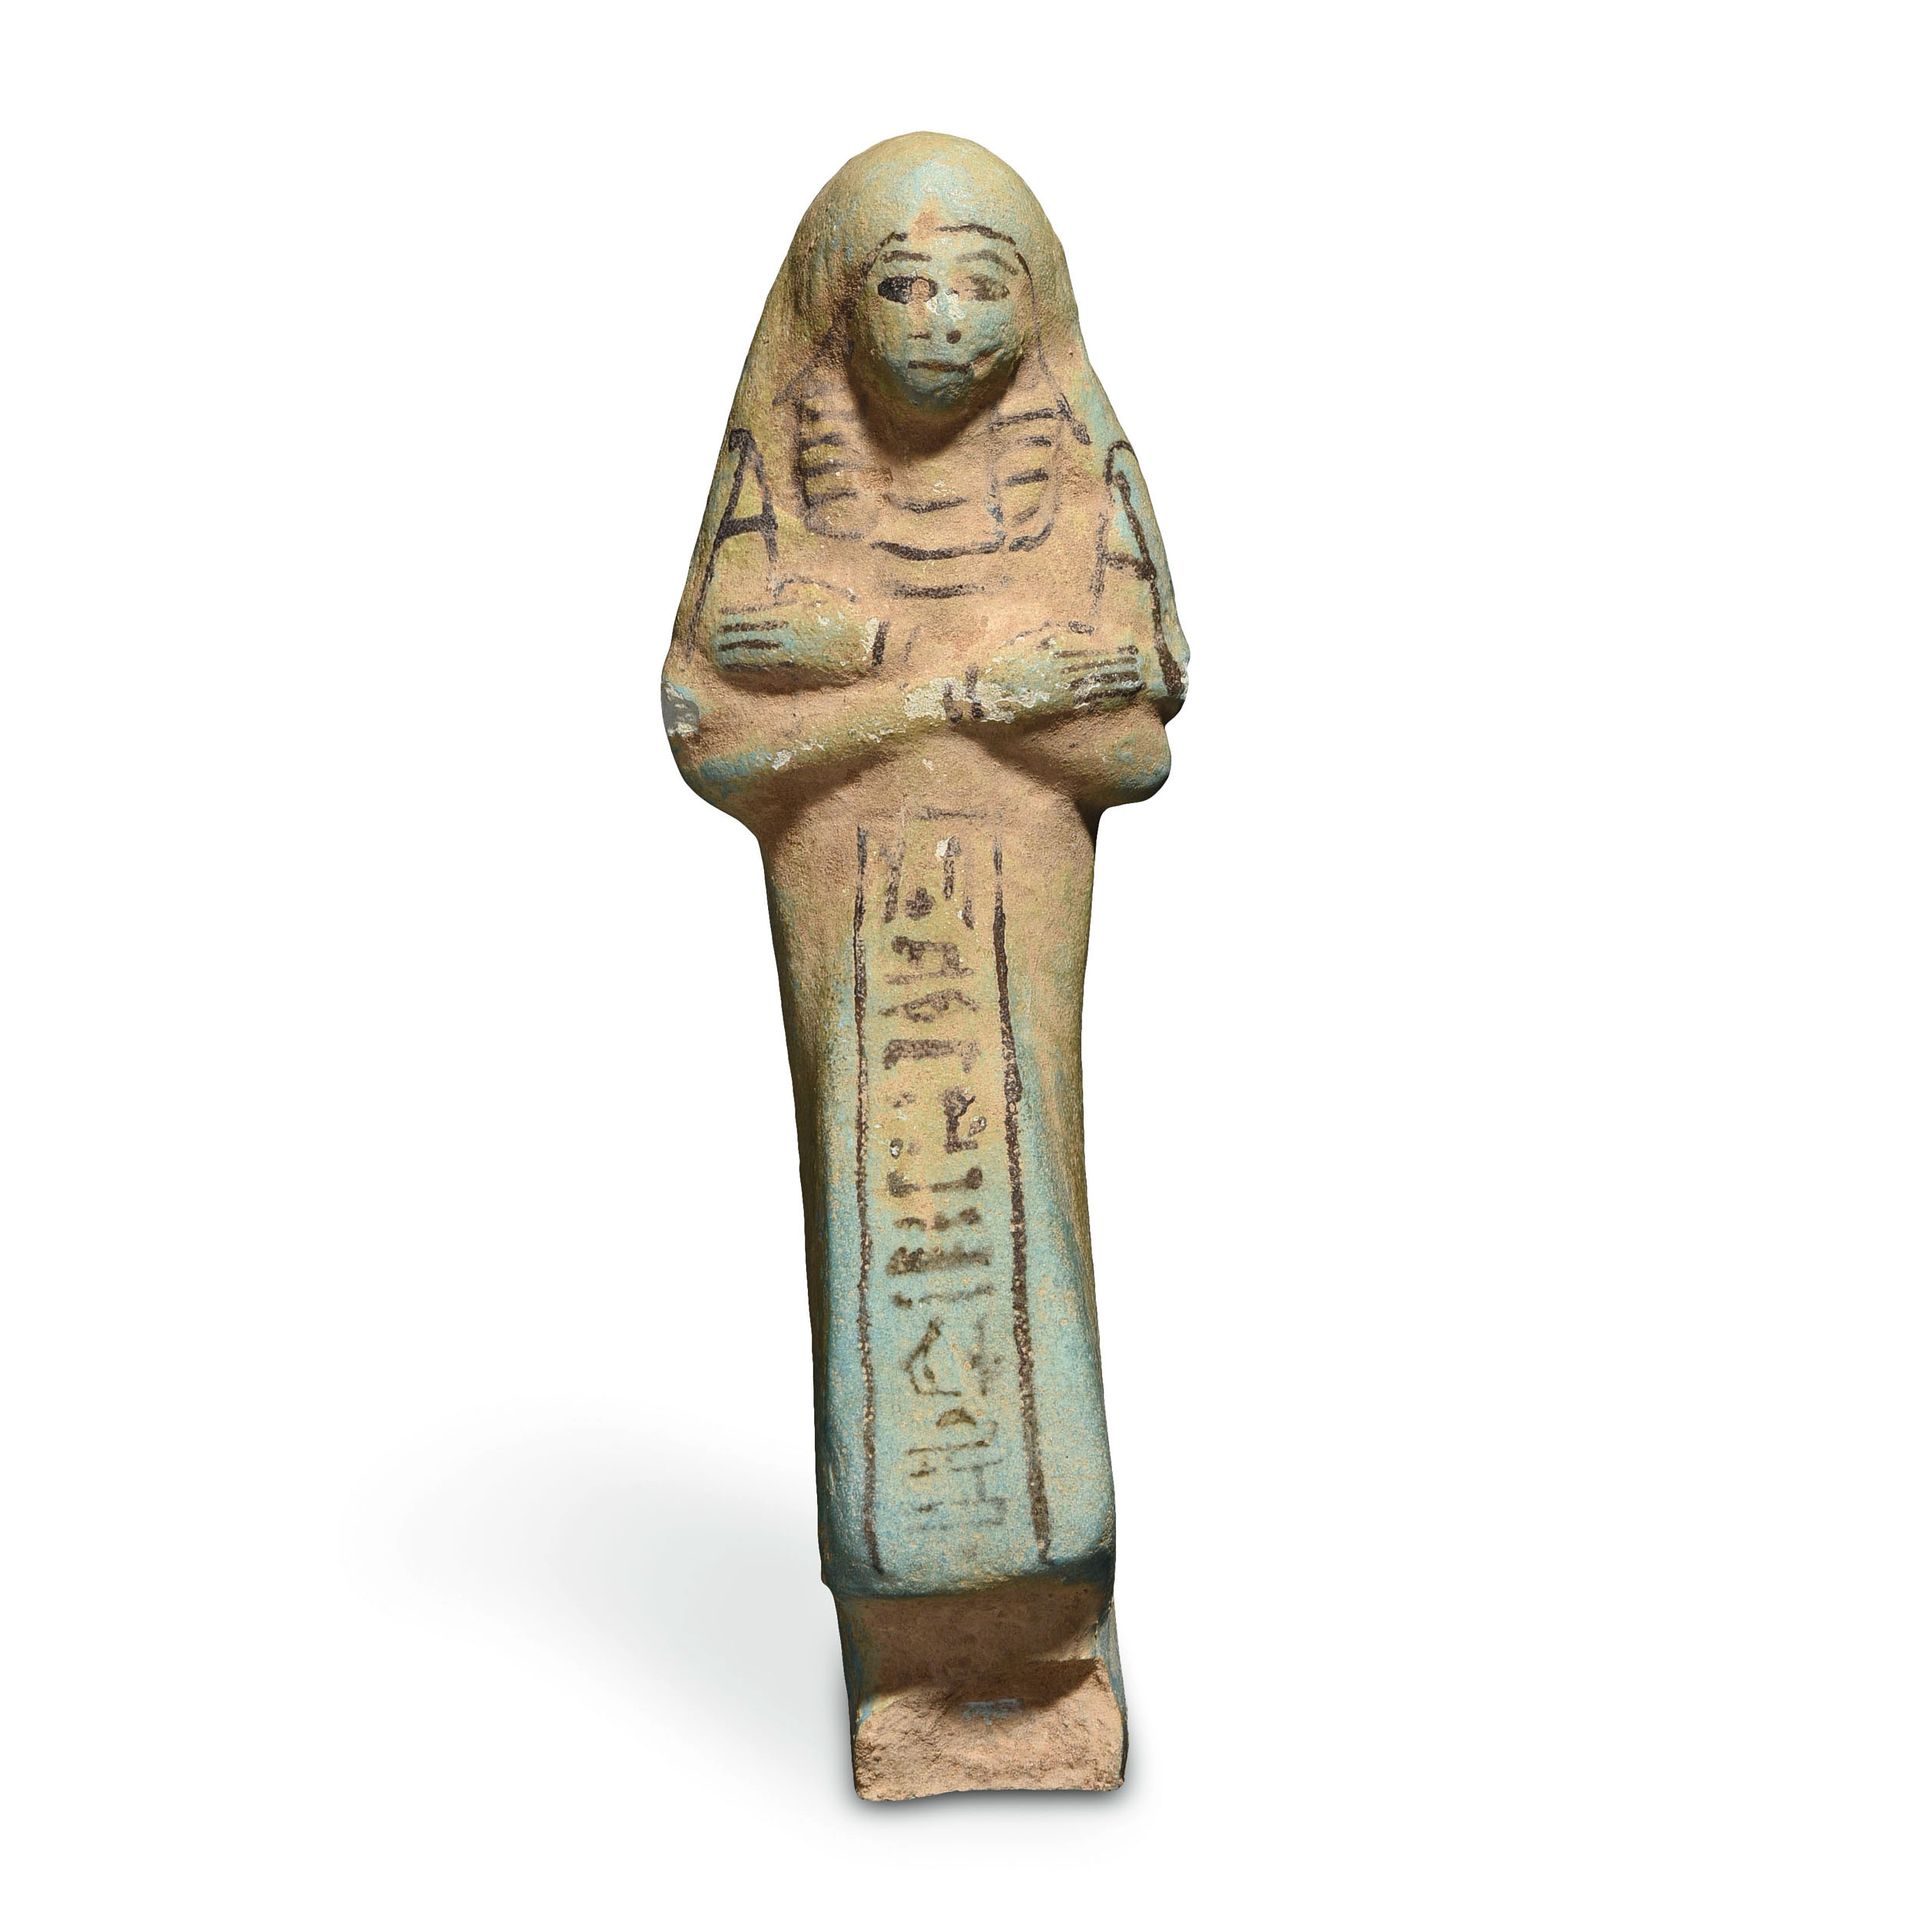 Null 活着的人的服装中的oushabti

埃及，第三中间时期，公元前1070-664年

硅质陶器，蓝釉和黑色颜料。失踪。

高约12厘米



出处

&hellip;